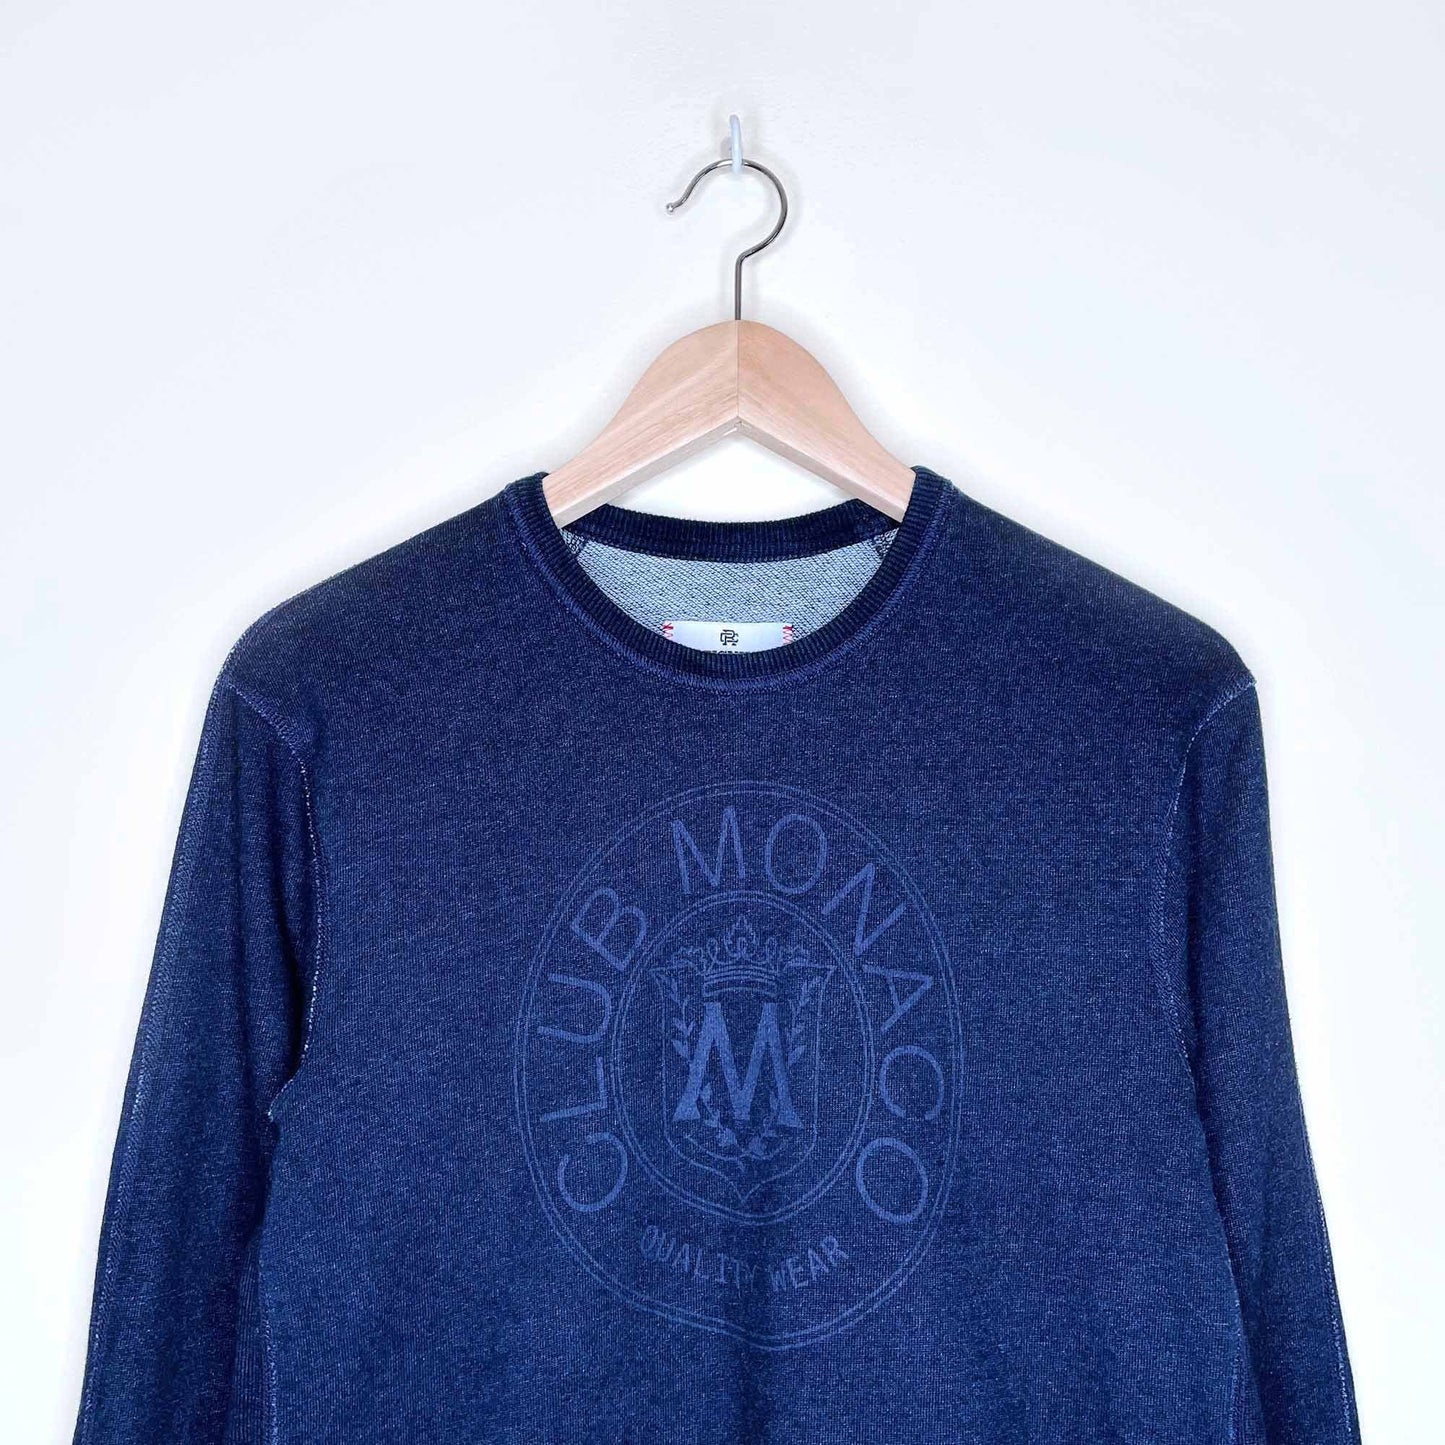 club monaco x reigning champ logo crest crewneck sweatshirt - size xs